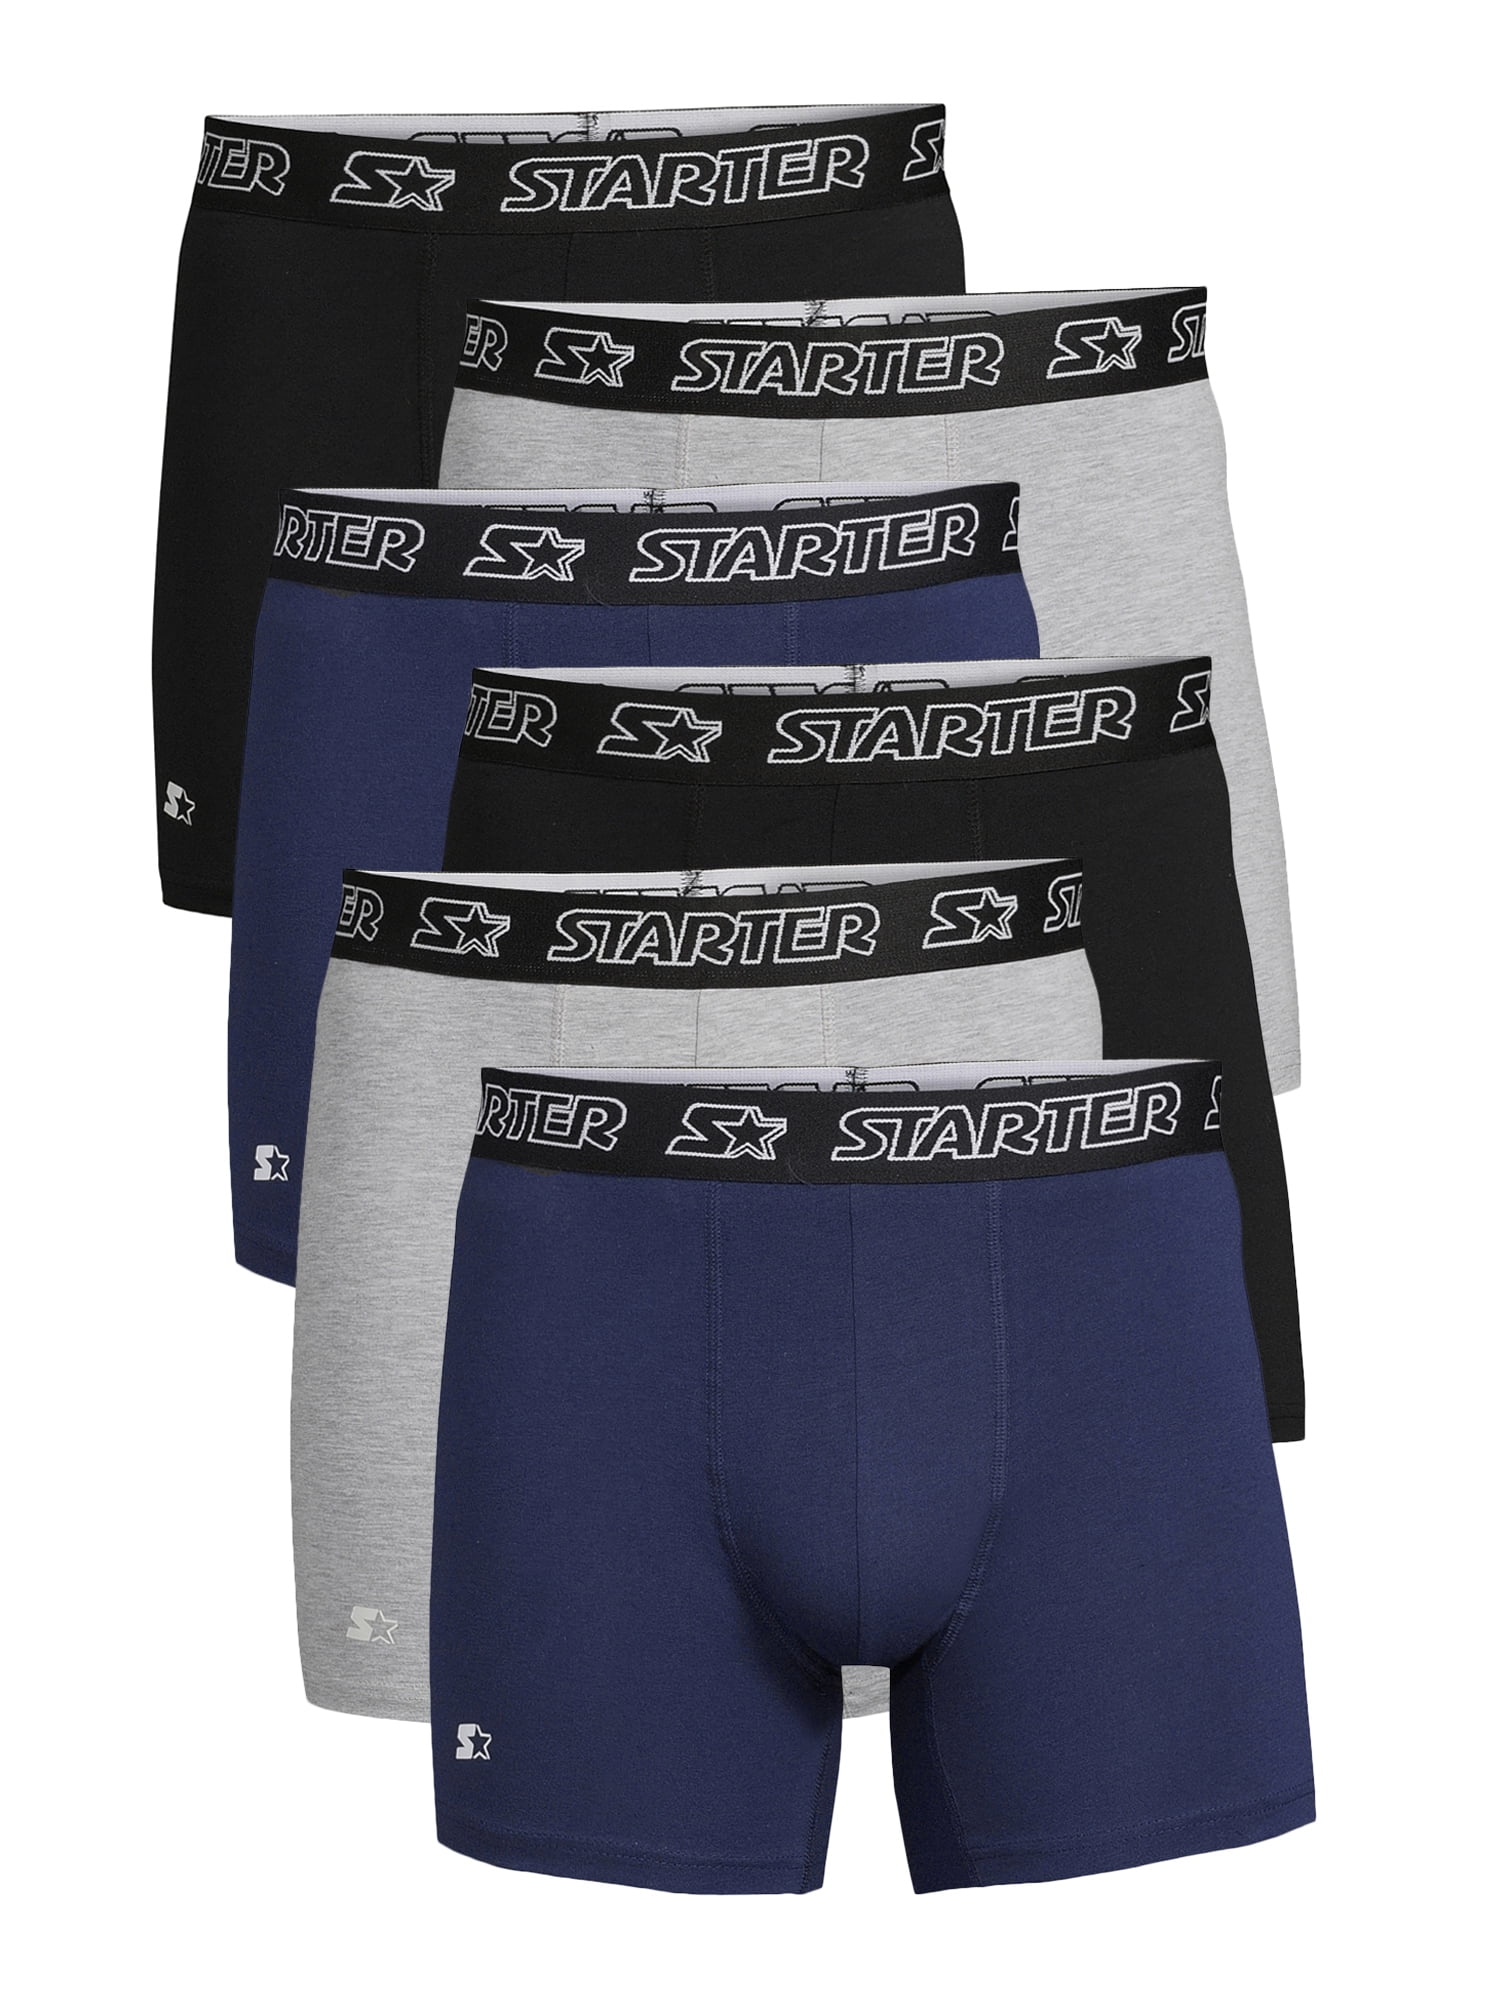 Starter Mens Boxer Briefs Breathable Cotton Underwear Pack, 6-Pack -  Walmart.com